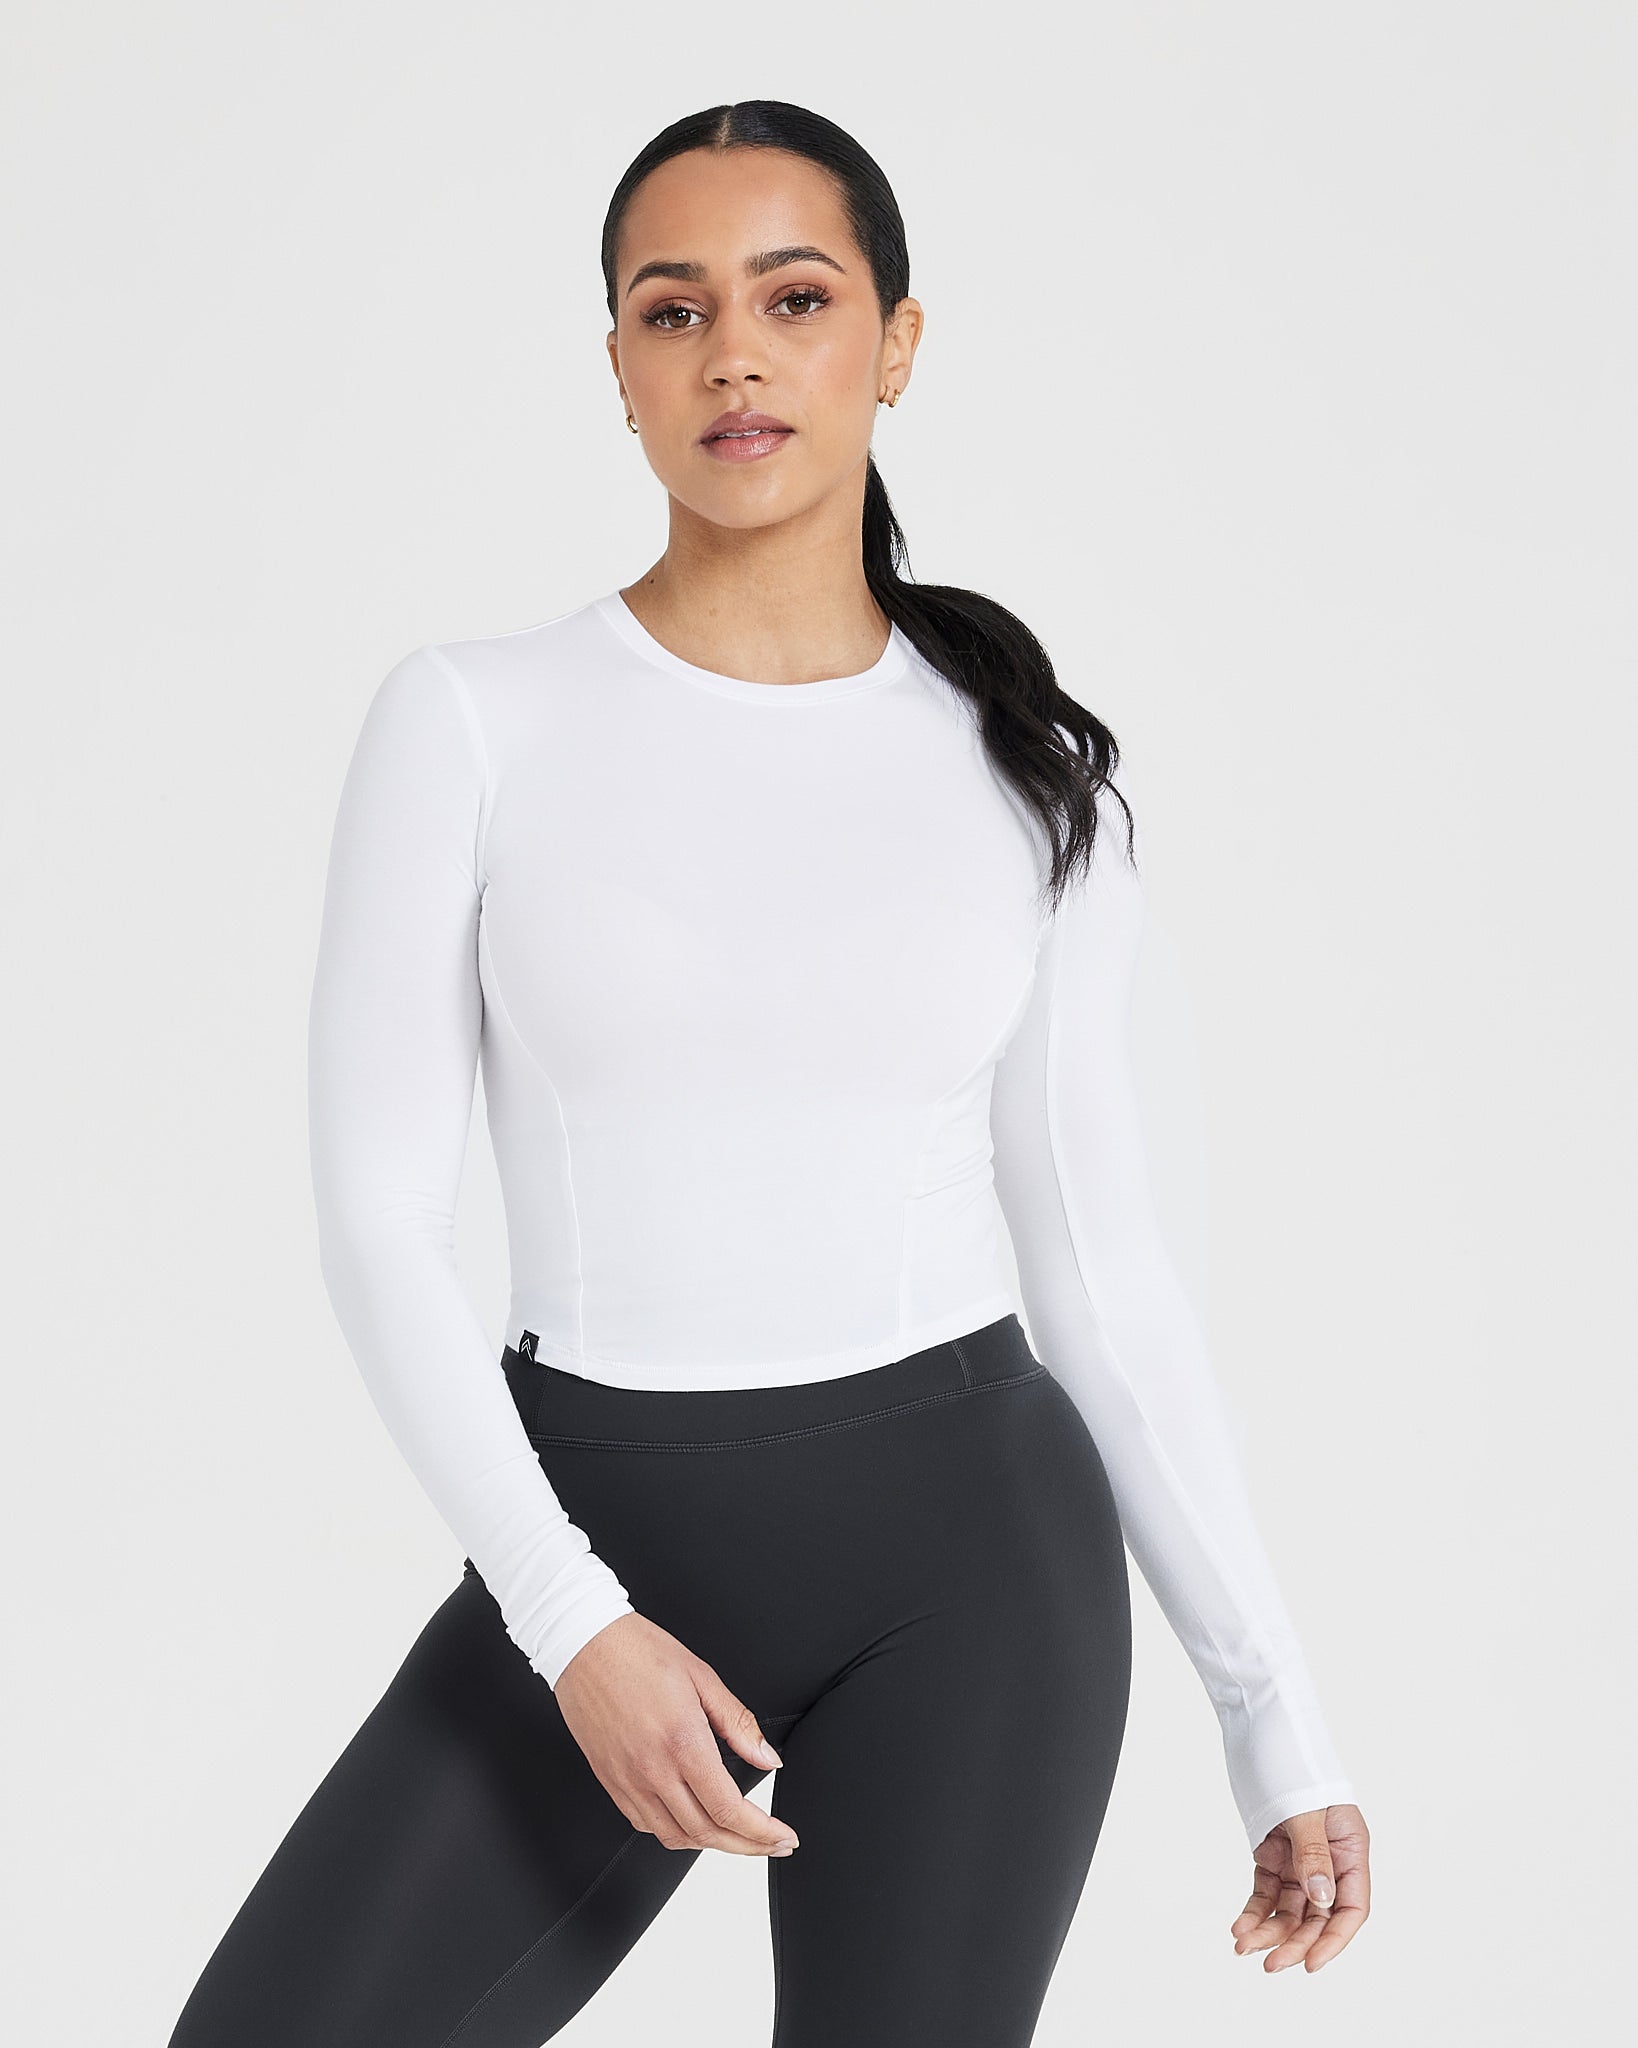 Tight White Long Sleeve Shirt Women's - Mid Length | Oner Active US